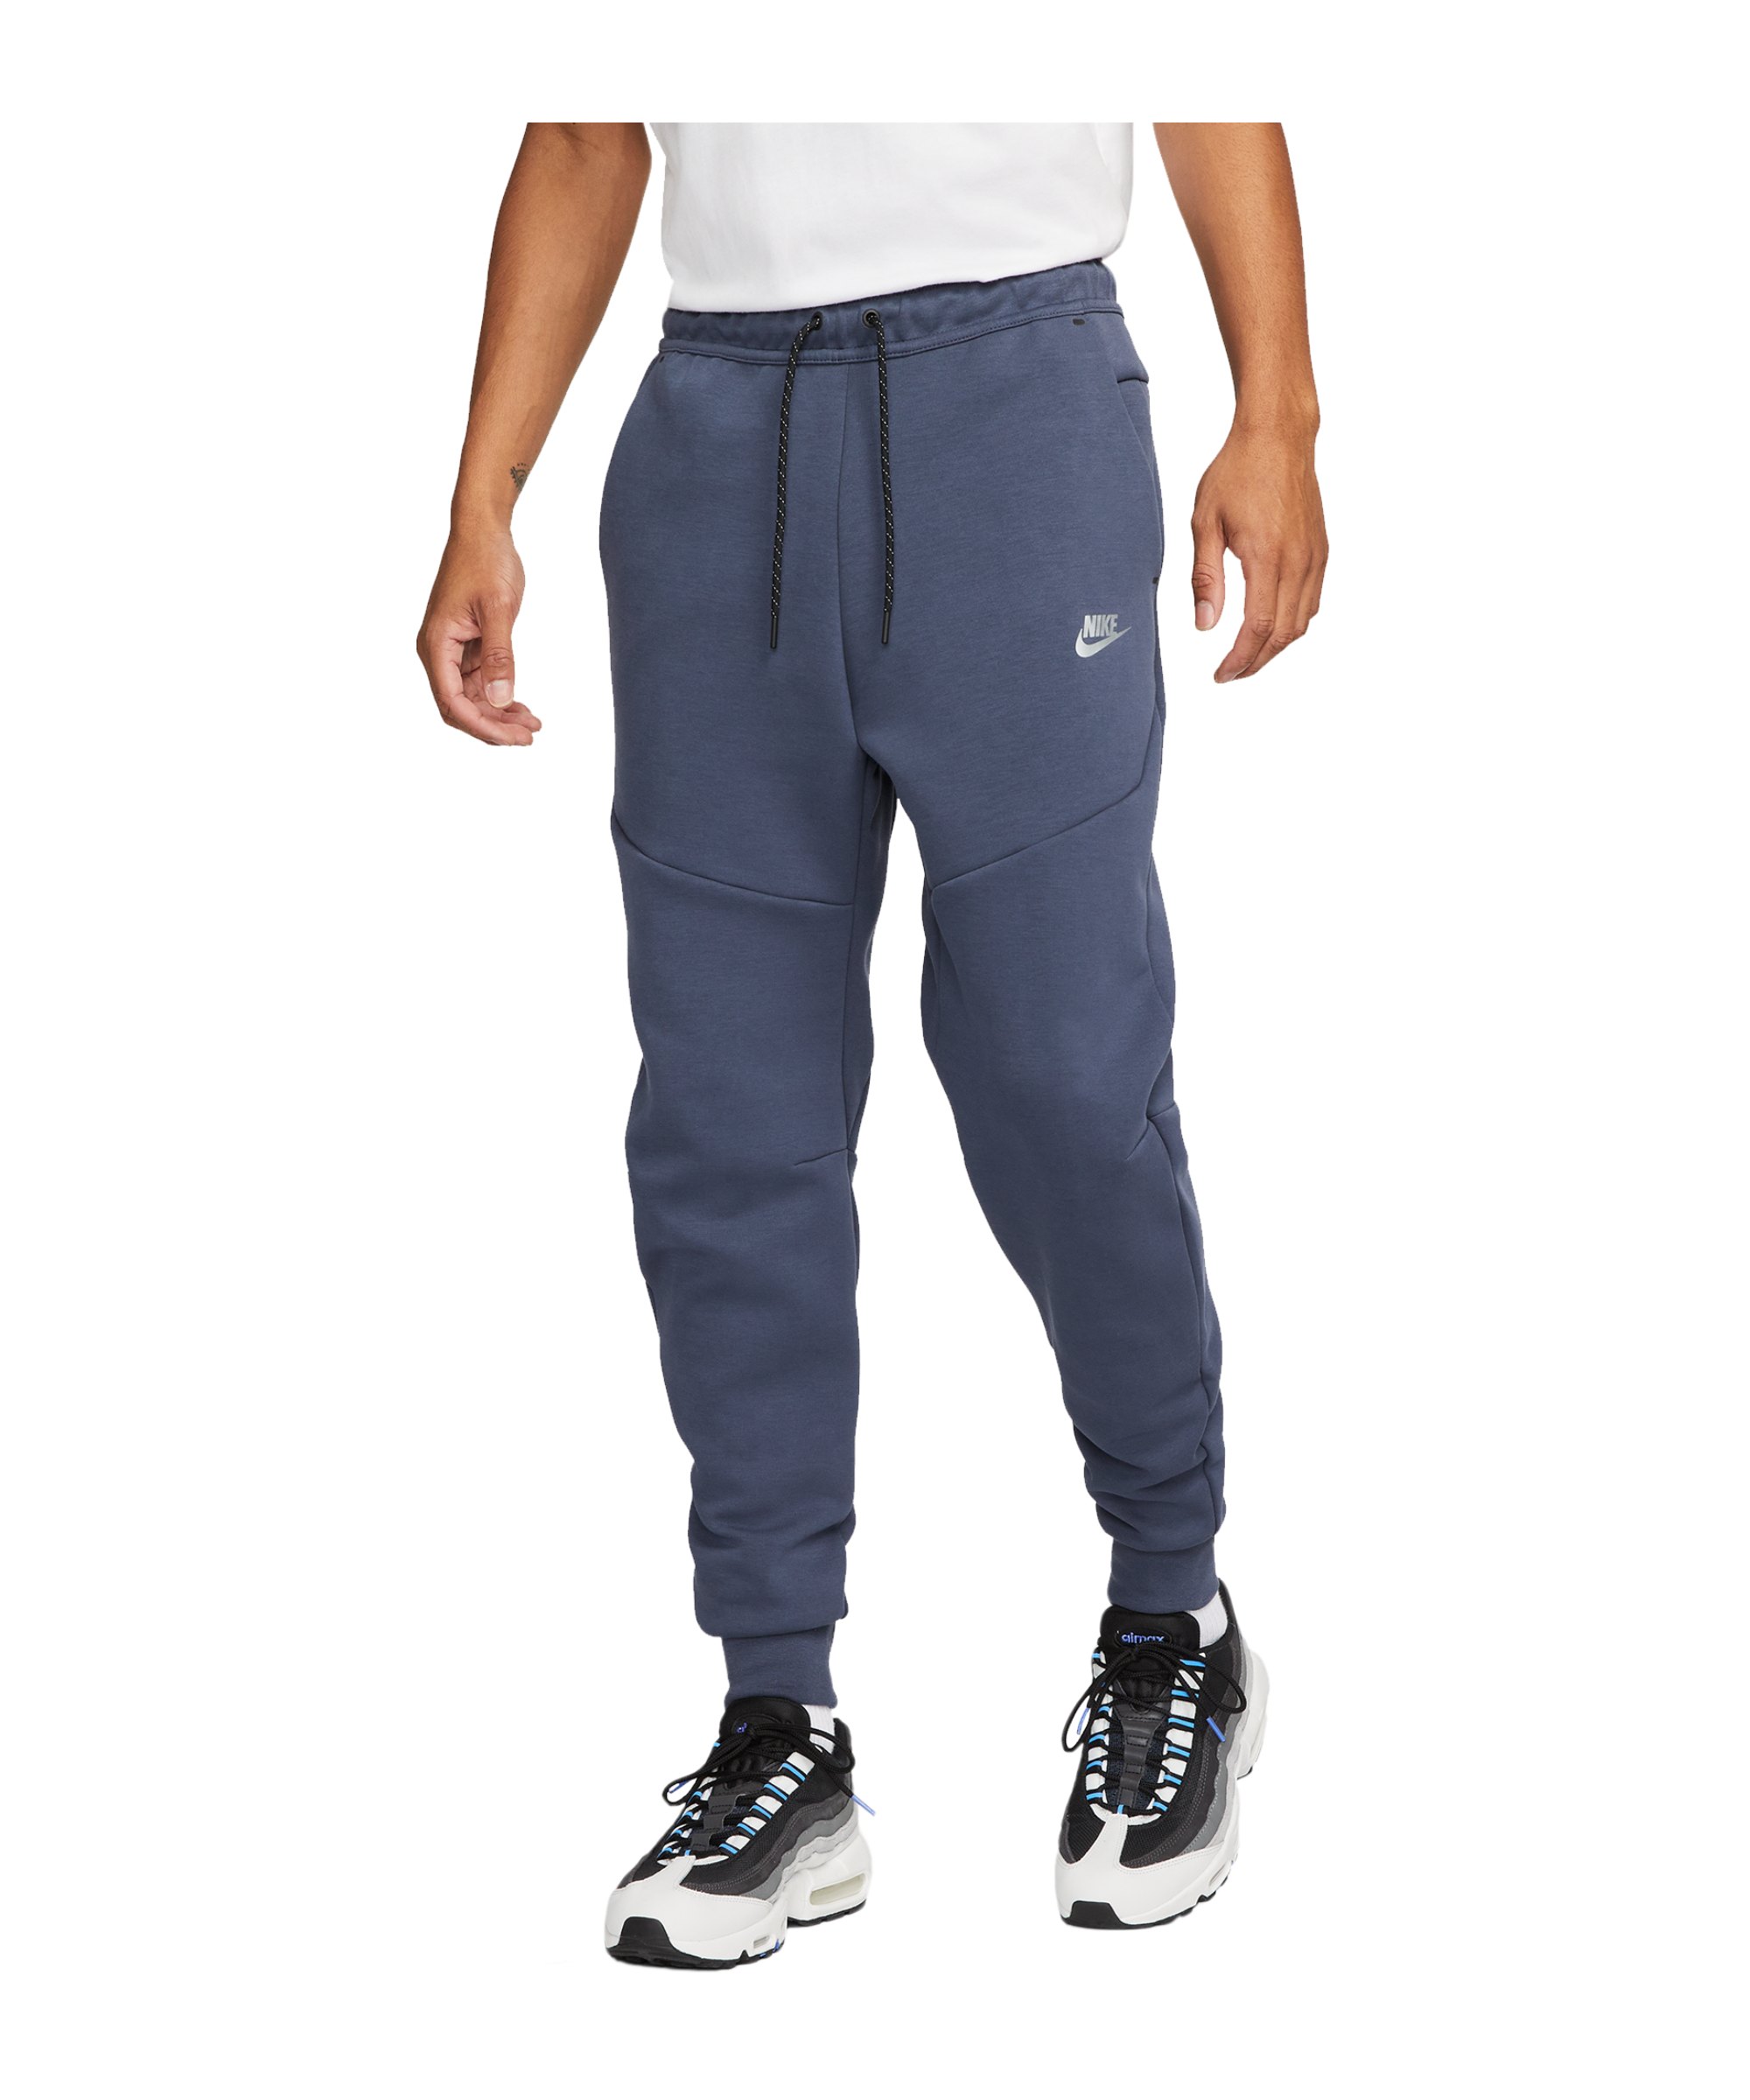 Nike Tech Fleece Jogginghose Blau Grau F437 - blau